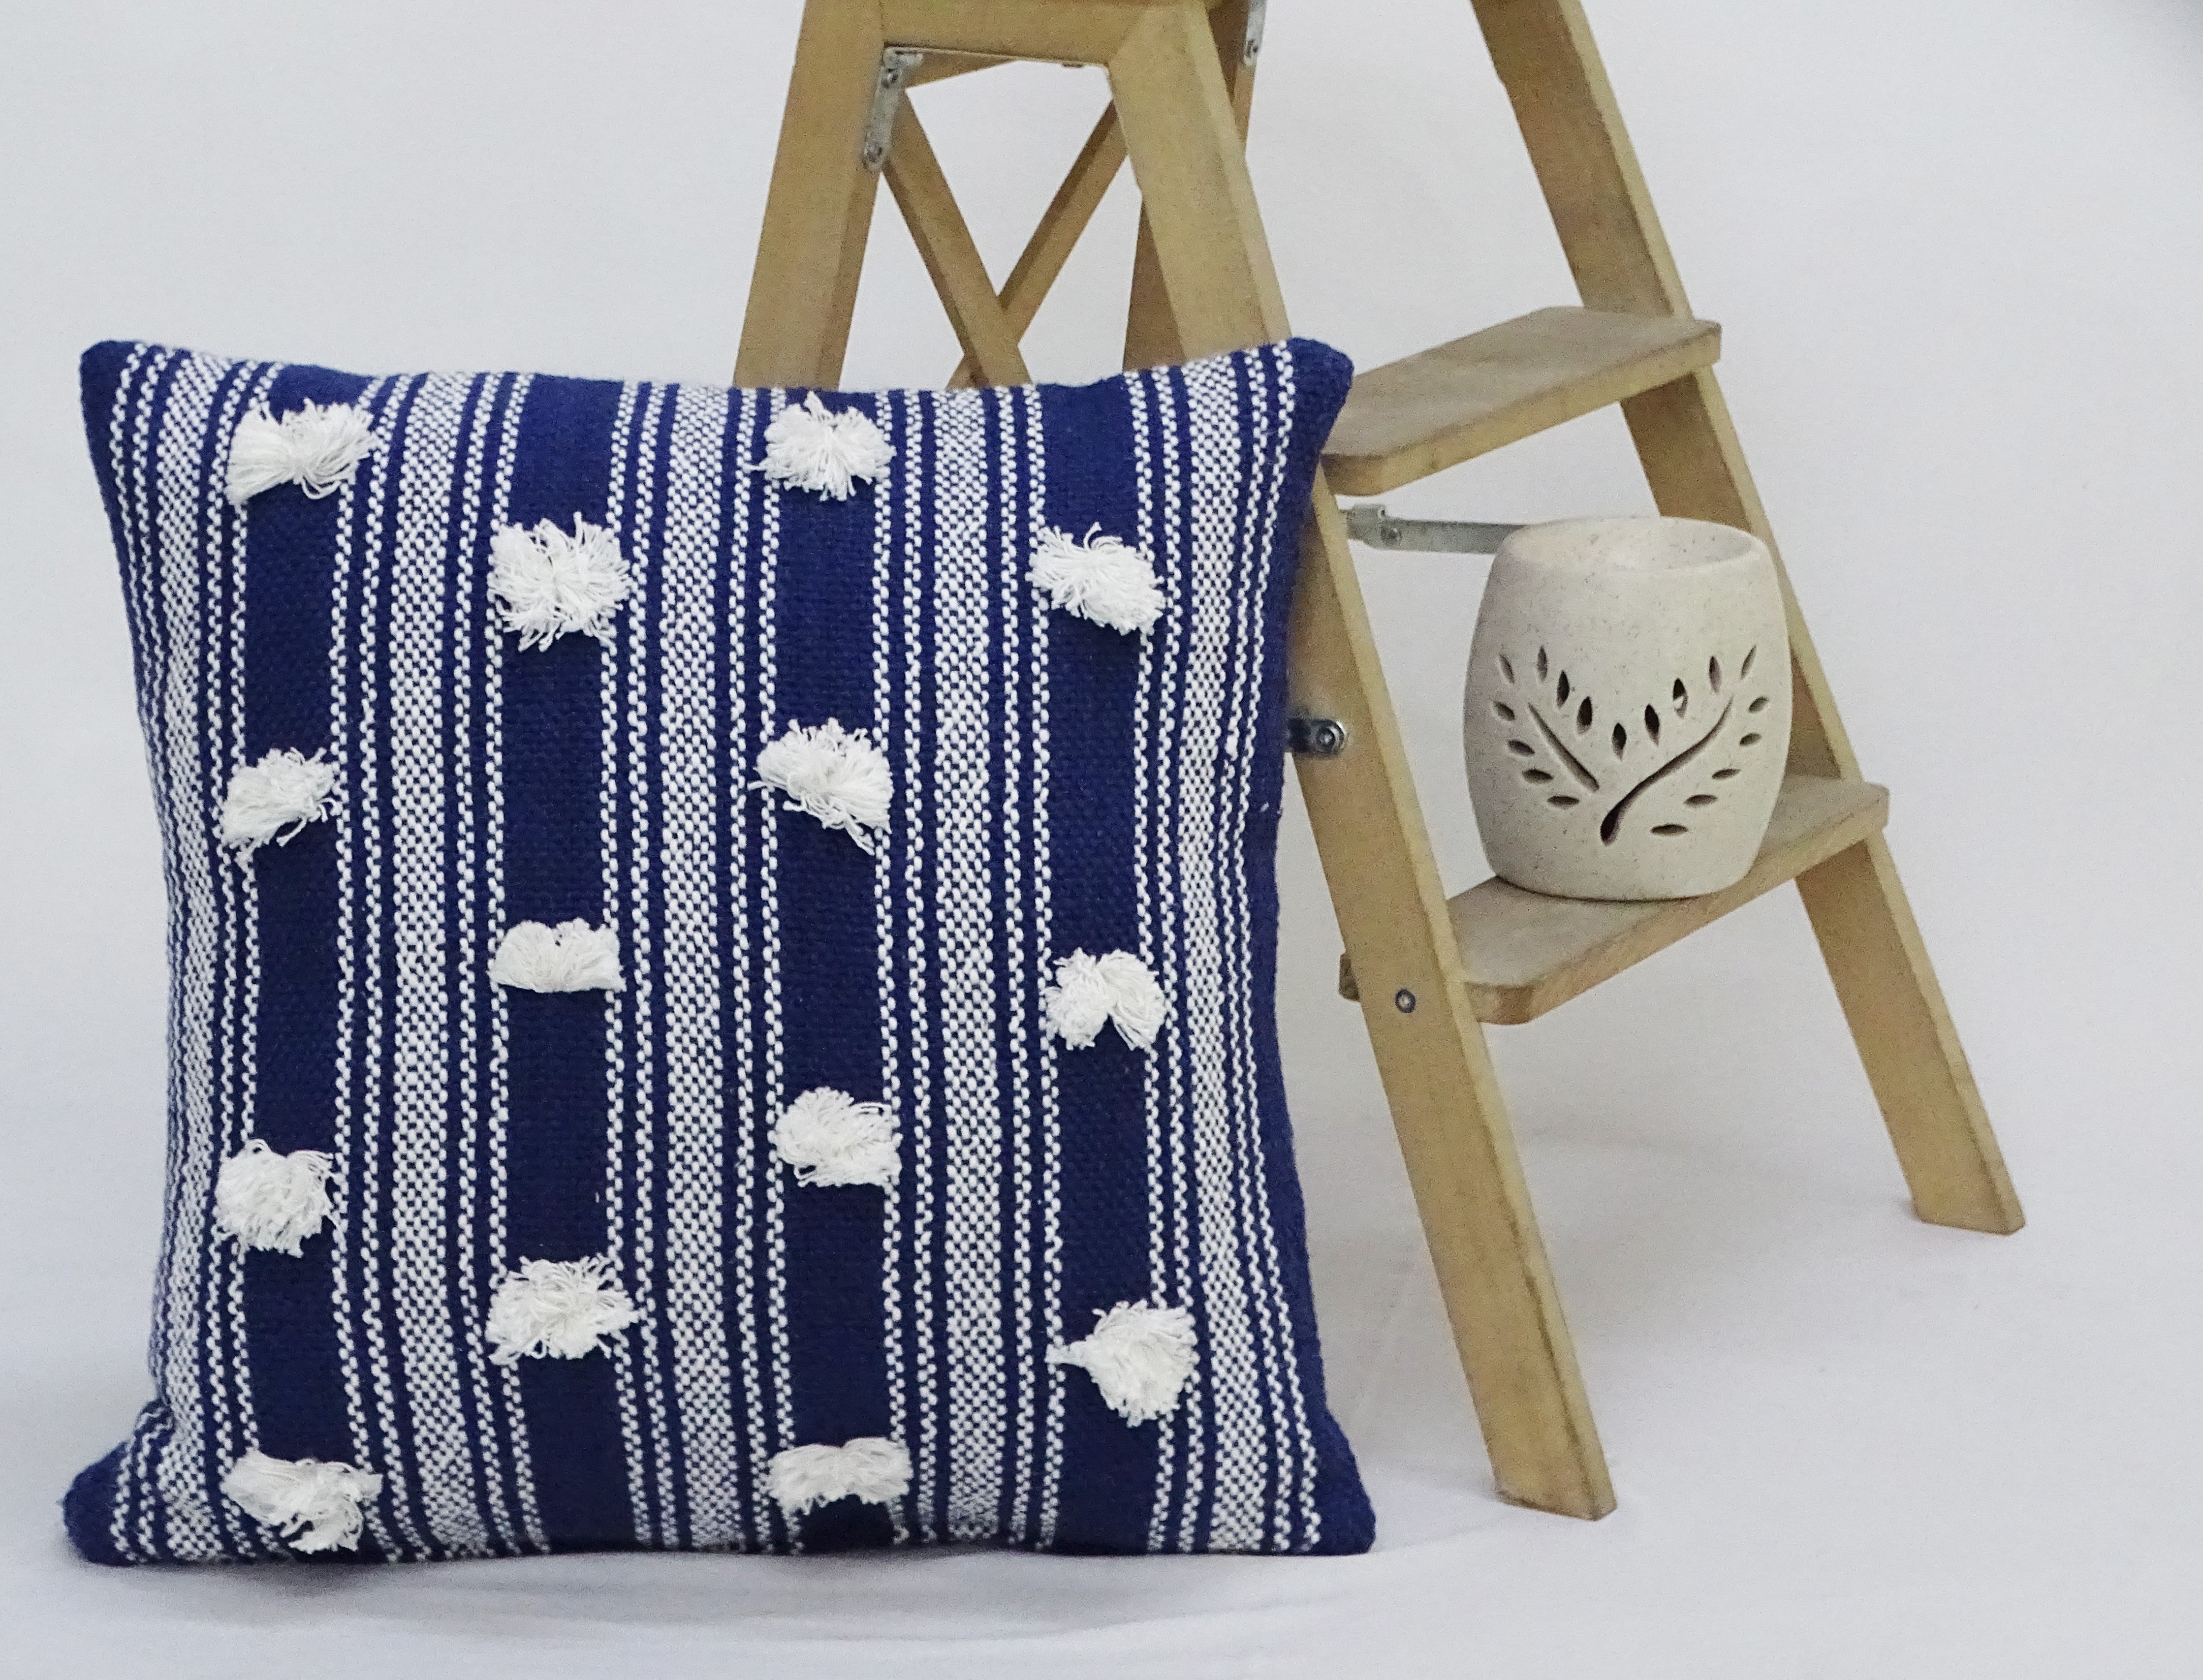 Vibhsa Blue Decorative Throw Pillow With Pom Pom In Burgundy